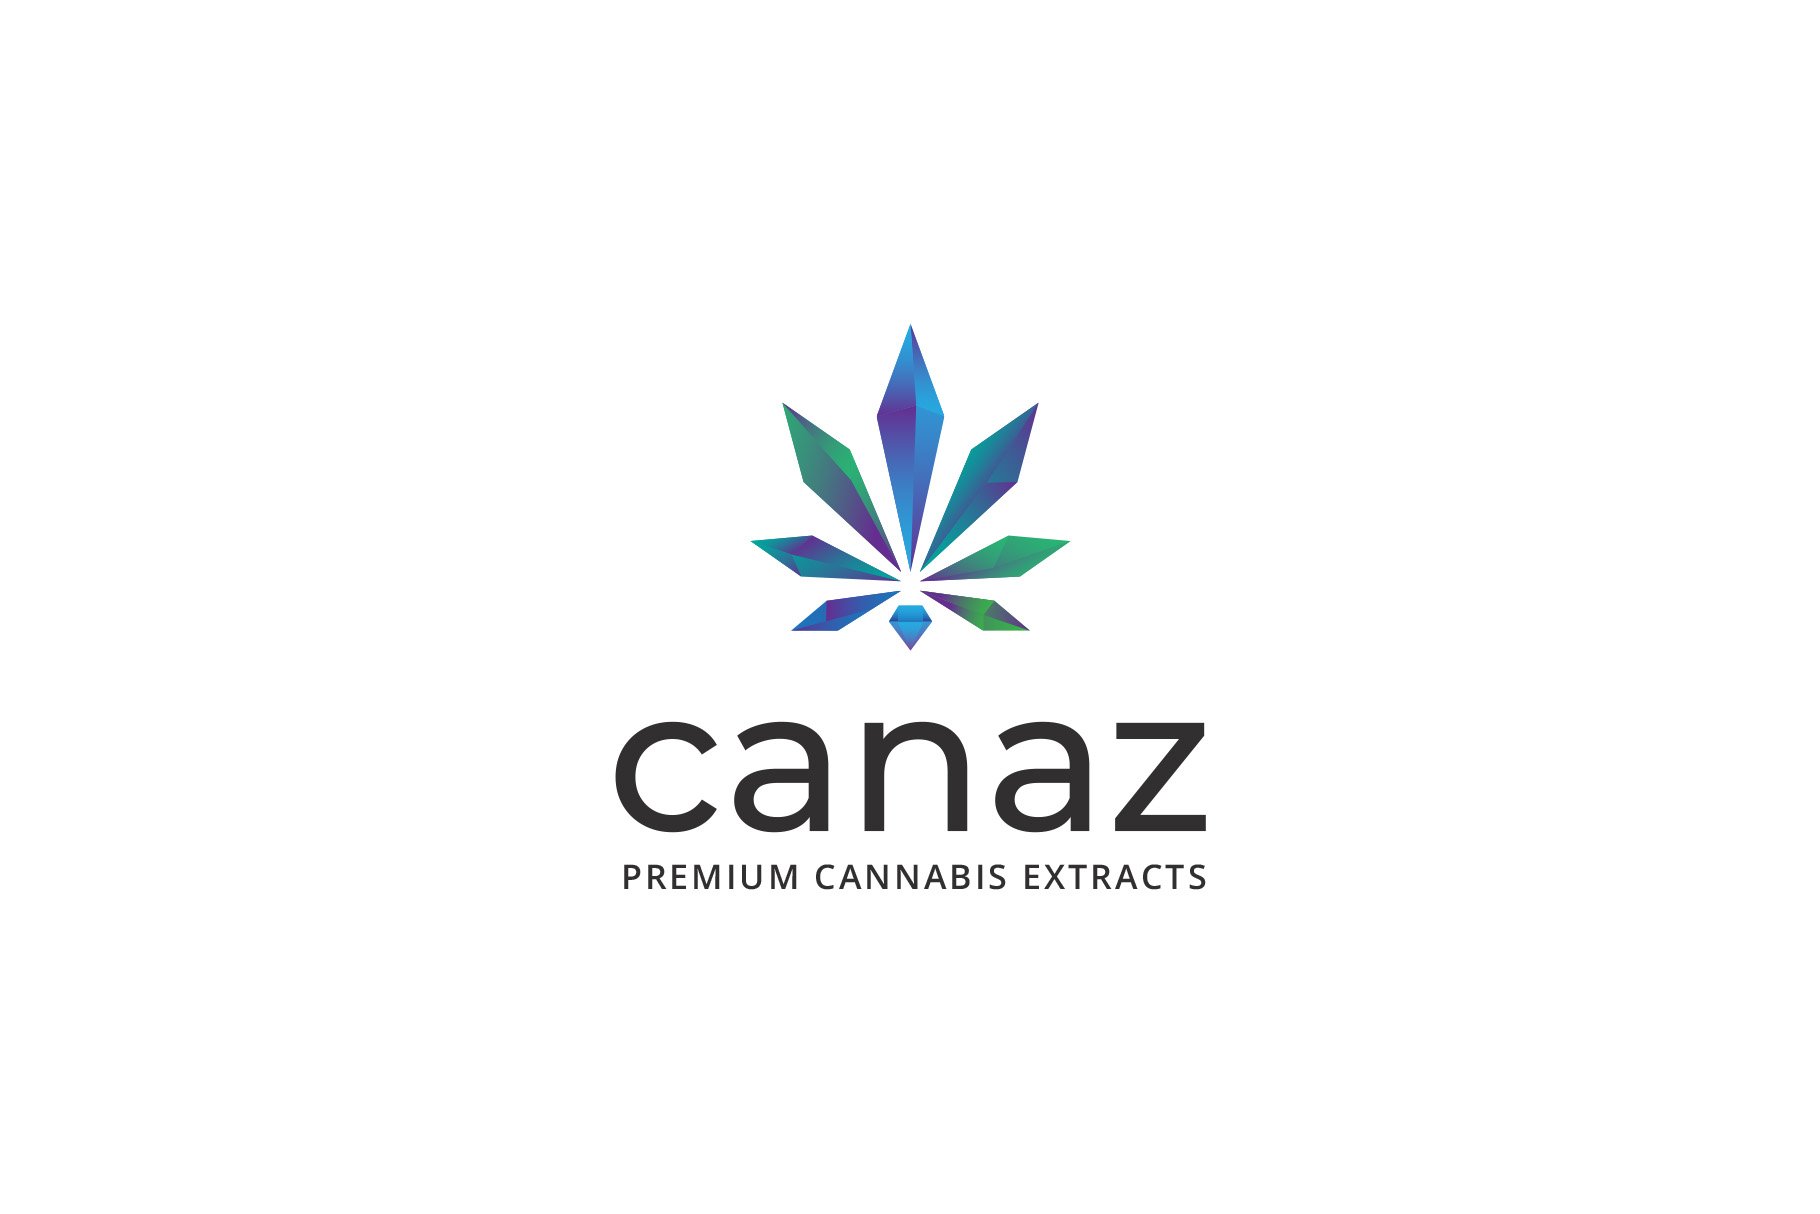 Canaz Cannabis Hemp Marijuana Logo cover image.